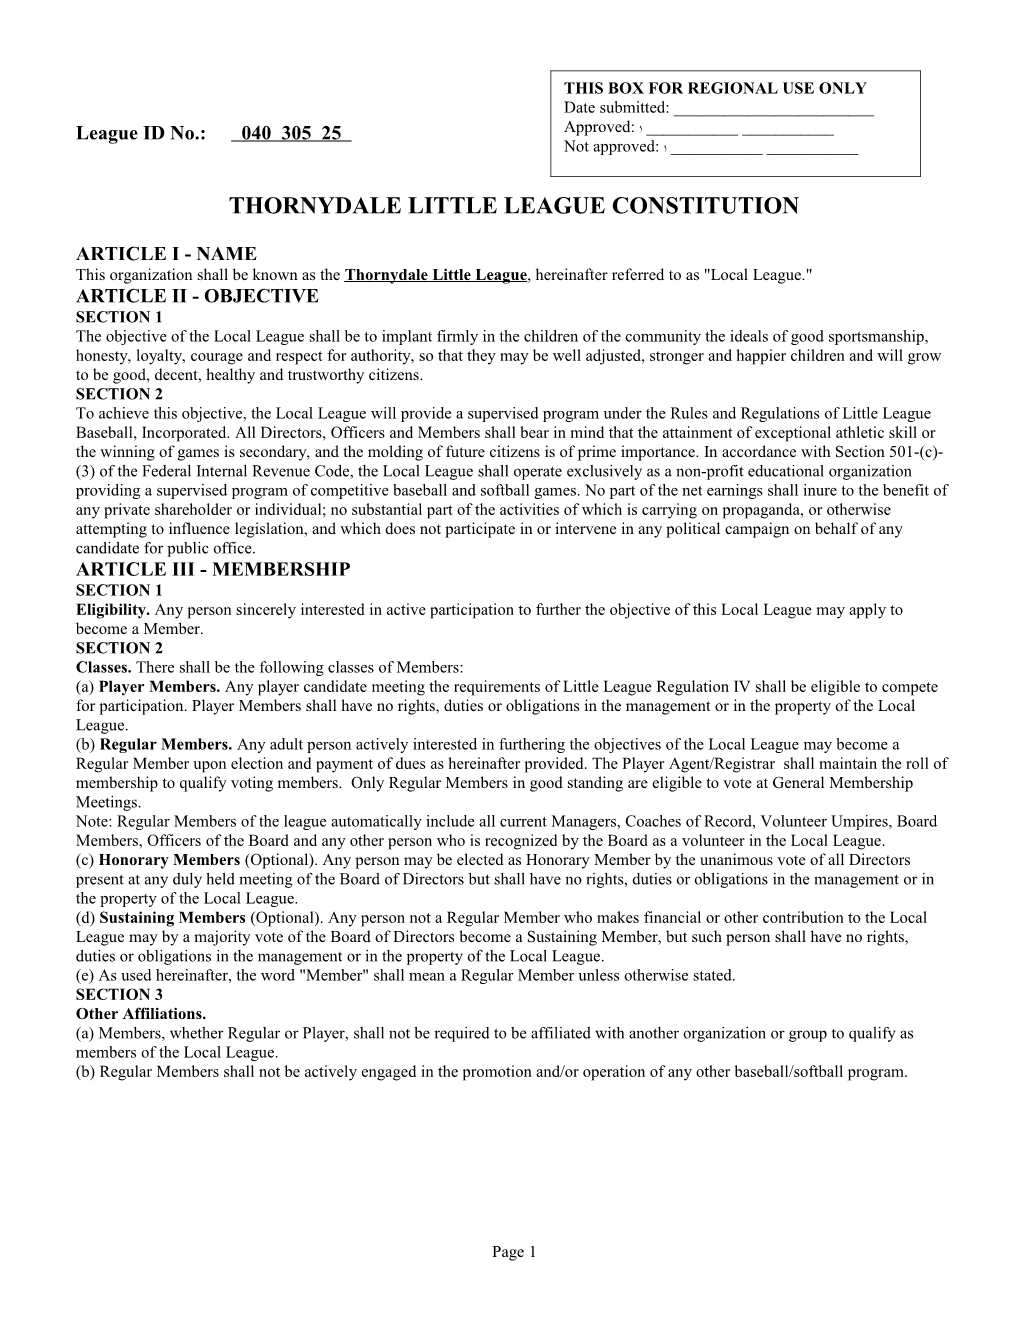 Thornydale Little League Constitution